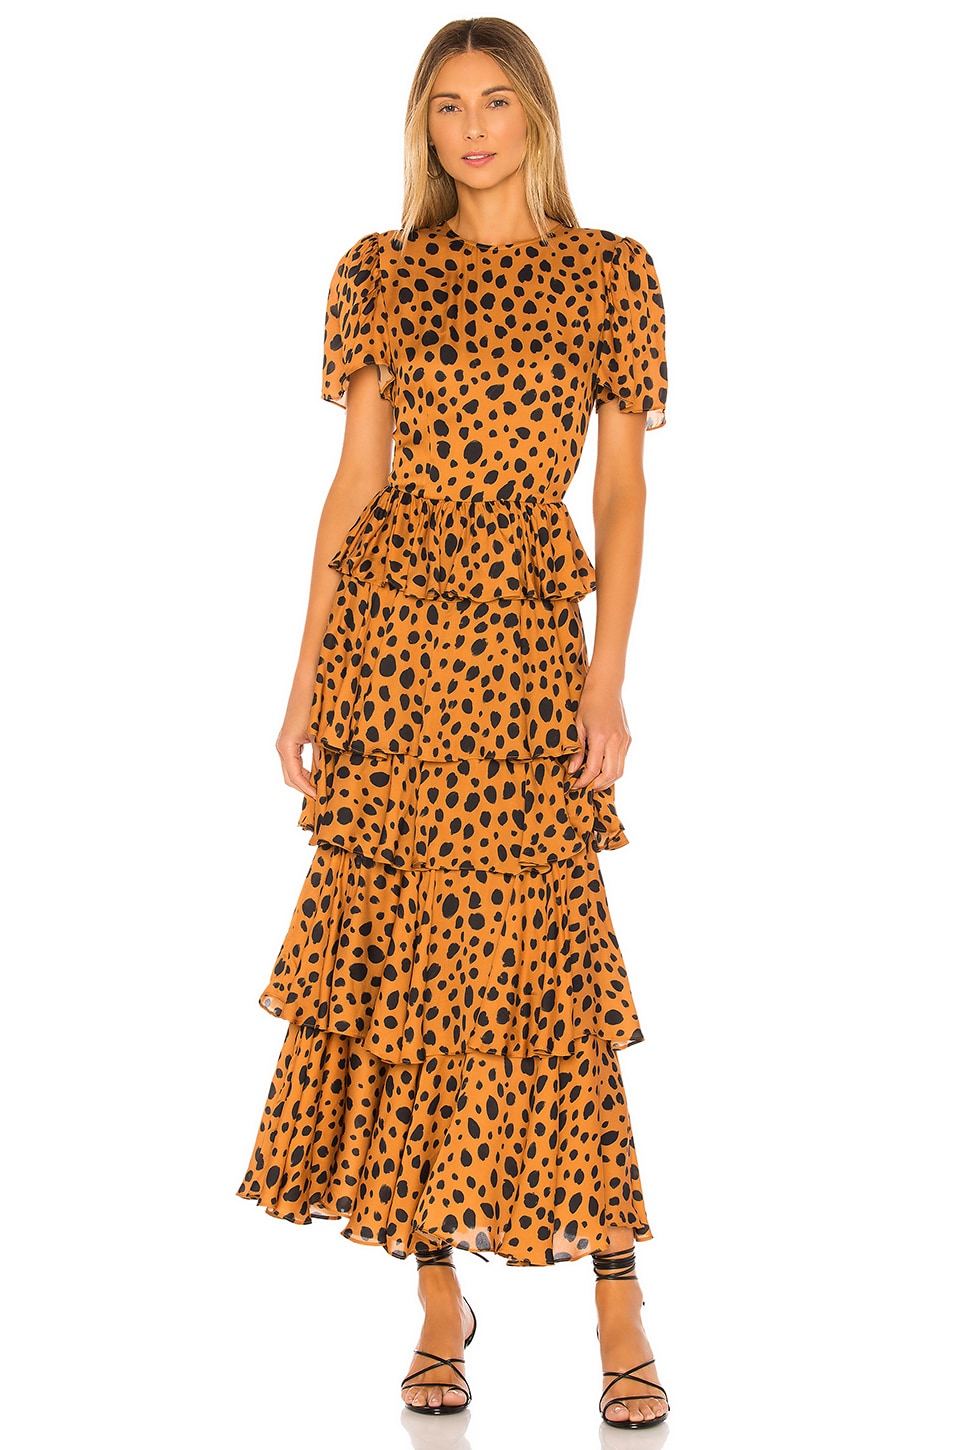 revolve cheetah dress